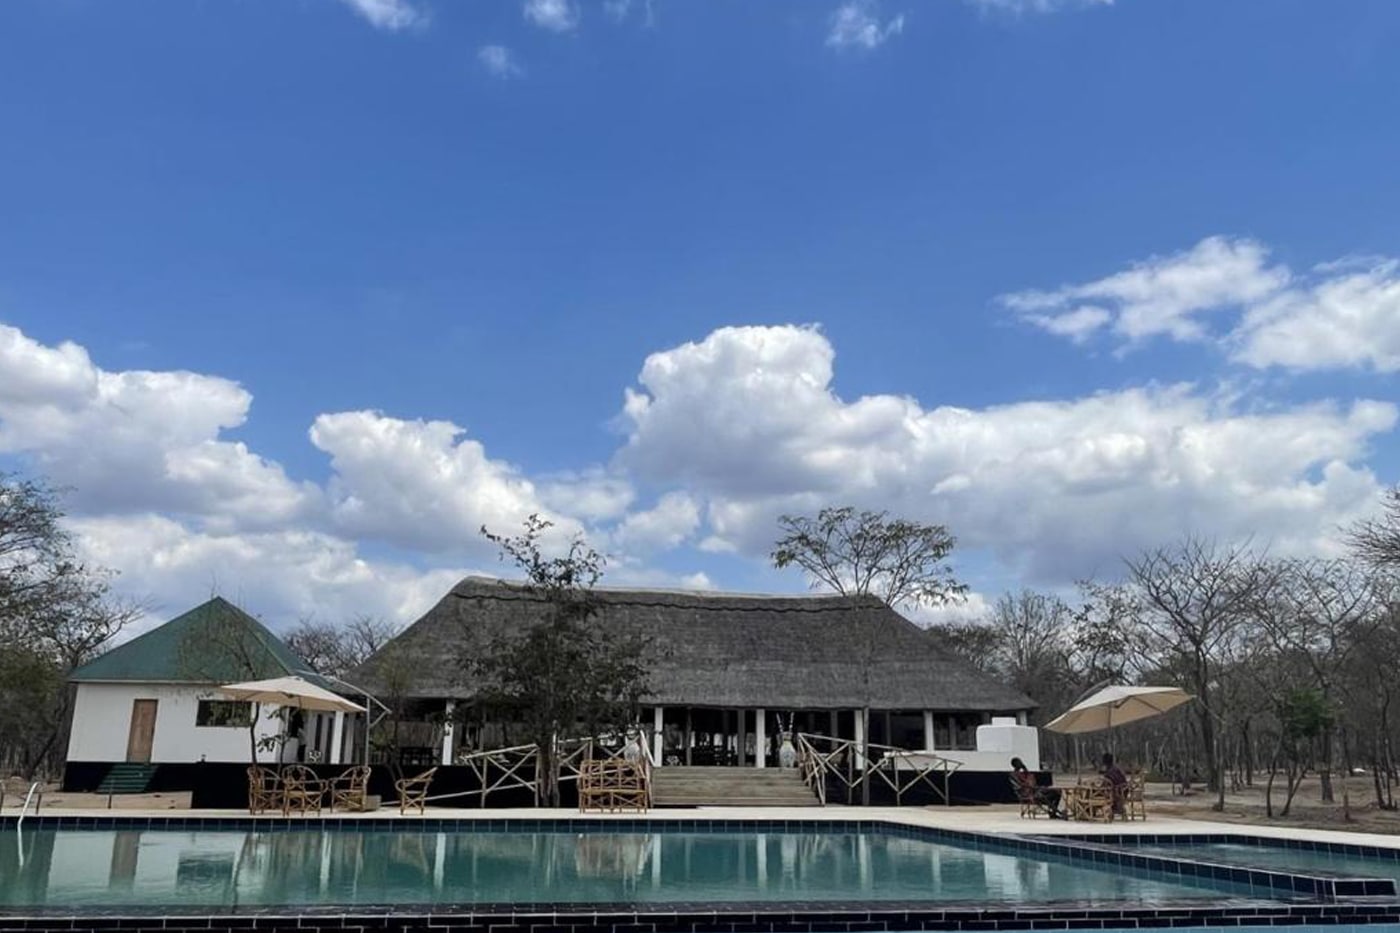 Kamp atupele - accommodatie in mikumi nationaal park - gemakkelijk reizen Tanzania